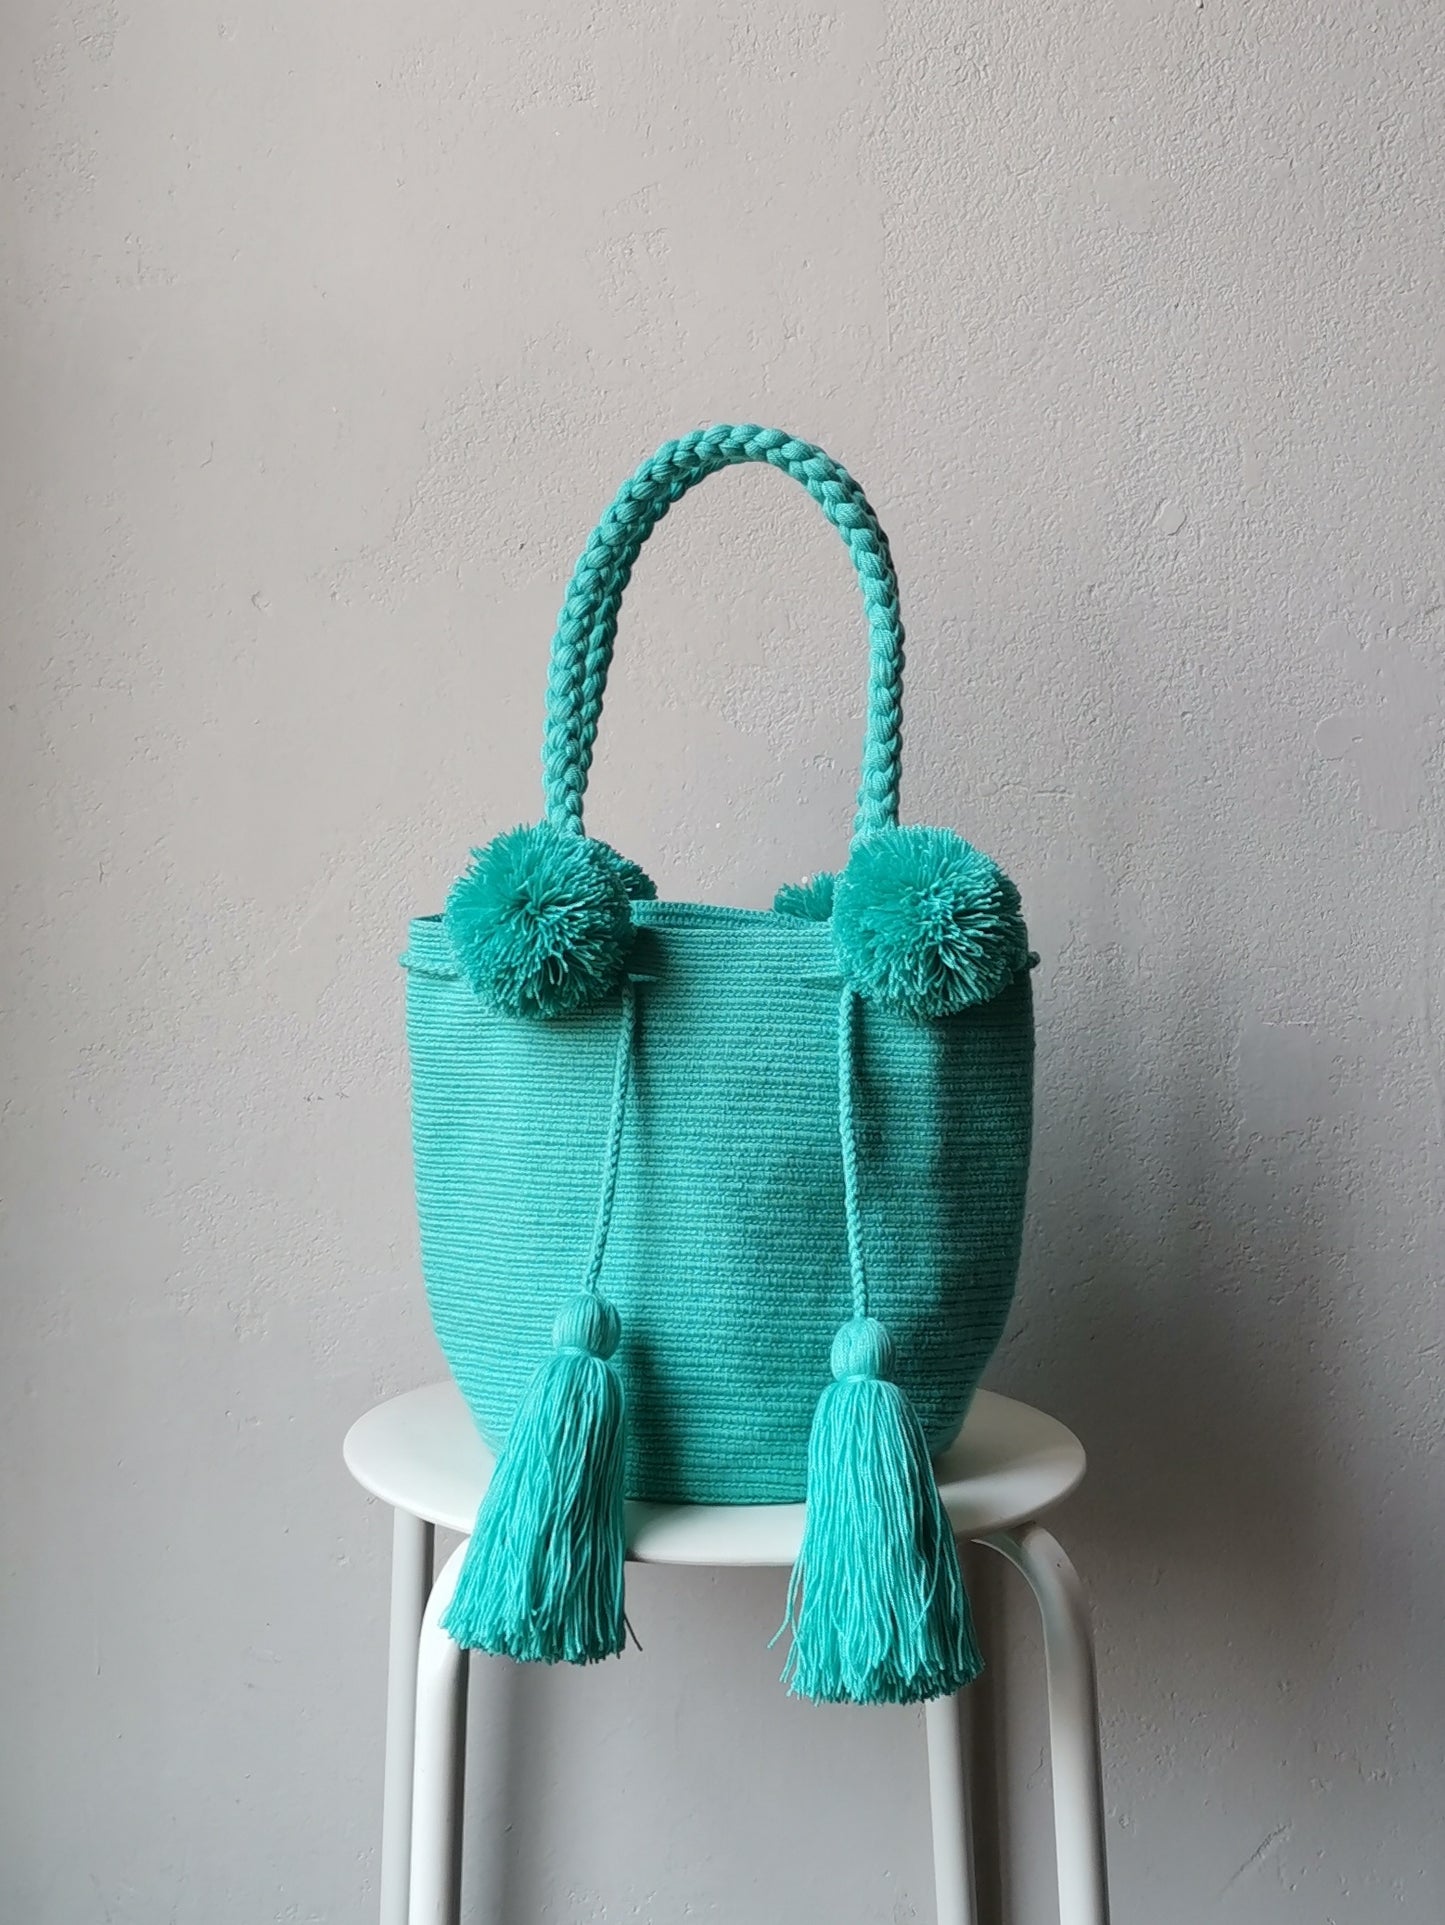 Tiffany light blue monocolor M/L mochila handbag